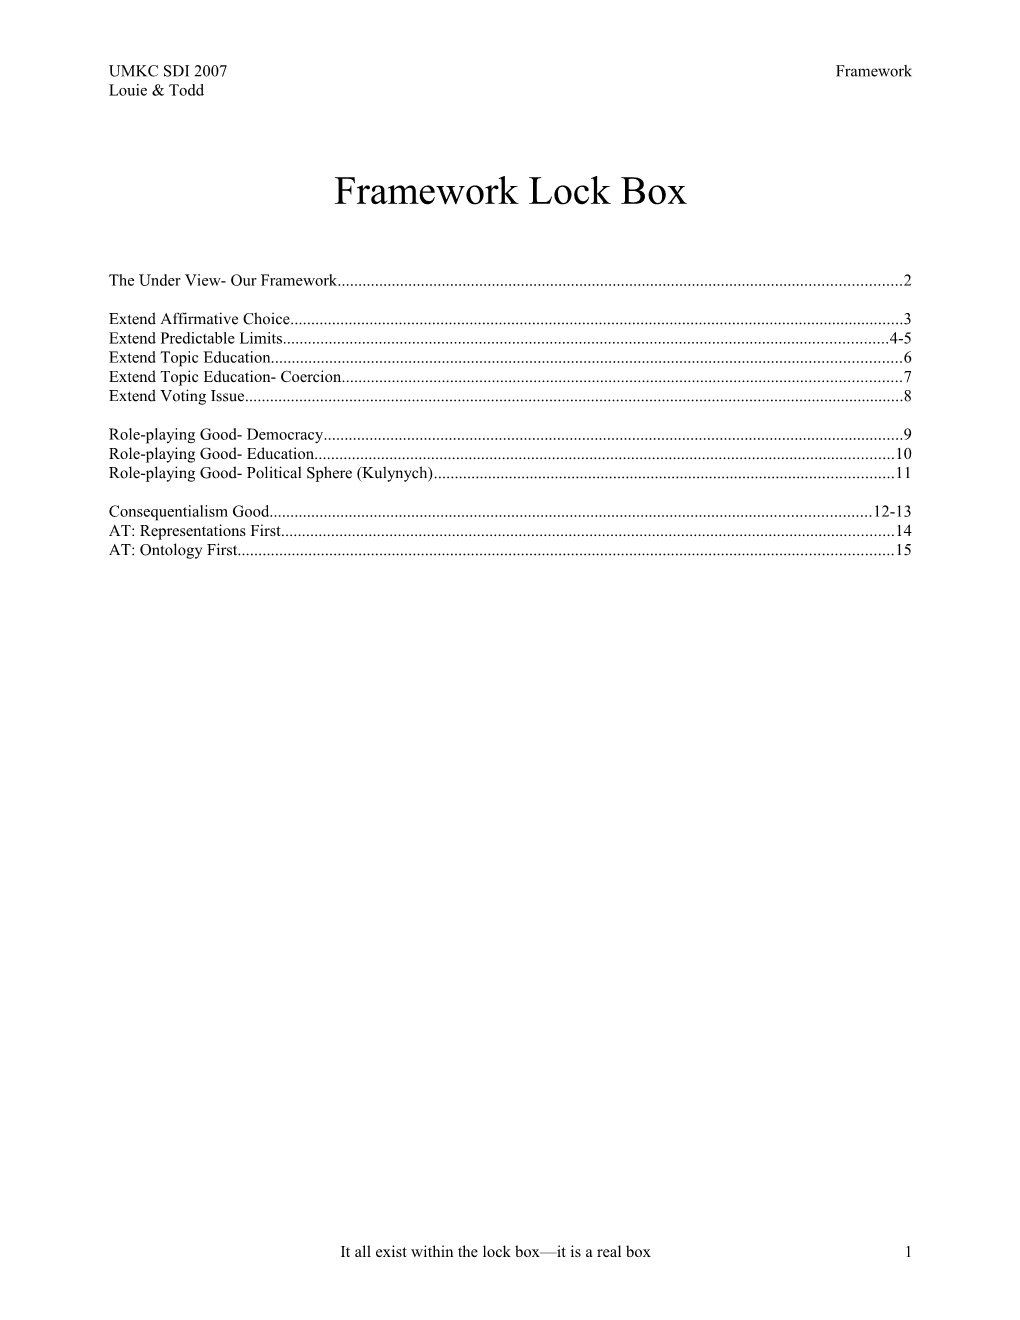 Framework Lock Box